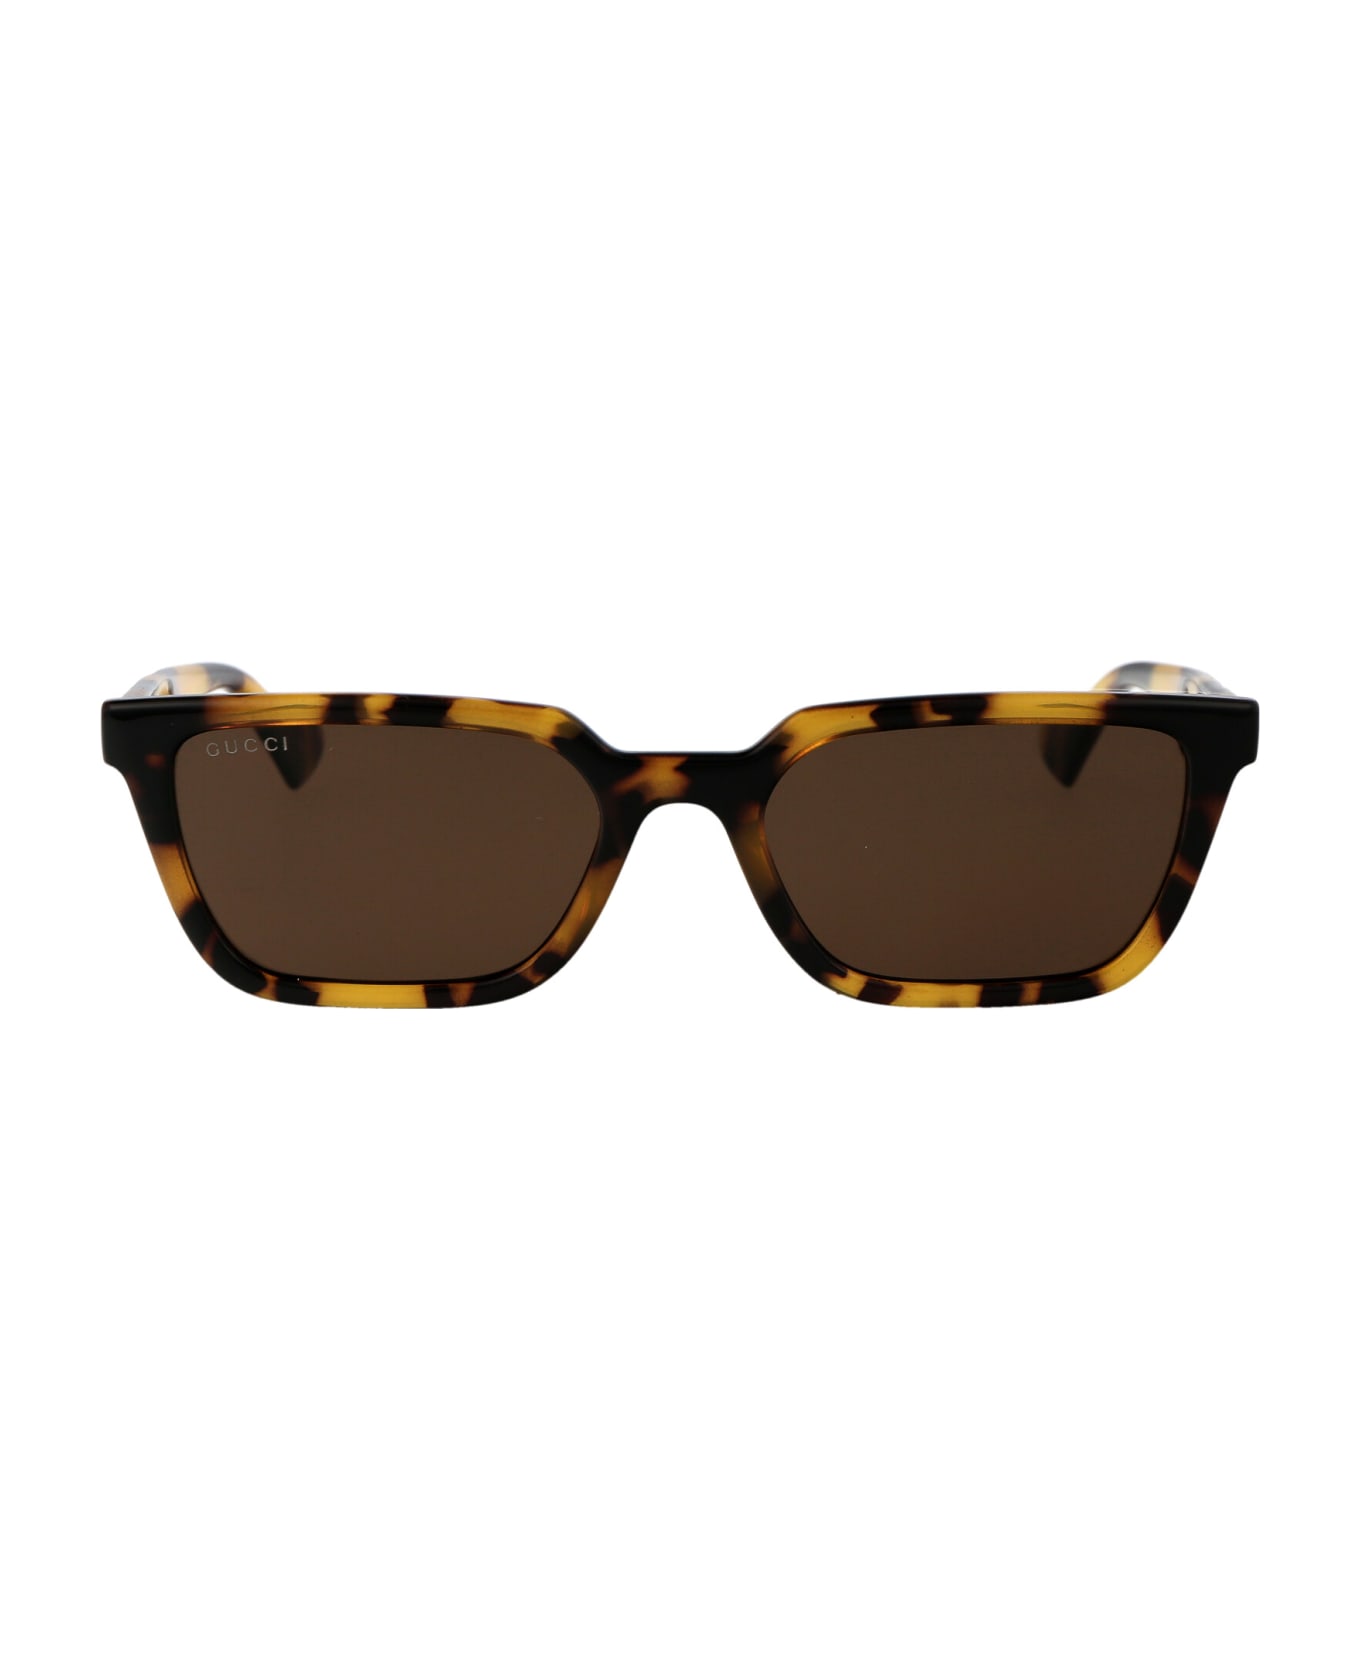 Gucci Eyewear Gg1539s Sunglasses - 005 YELLOW YELLOW BROWN